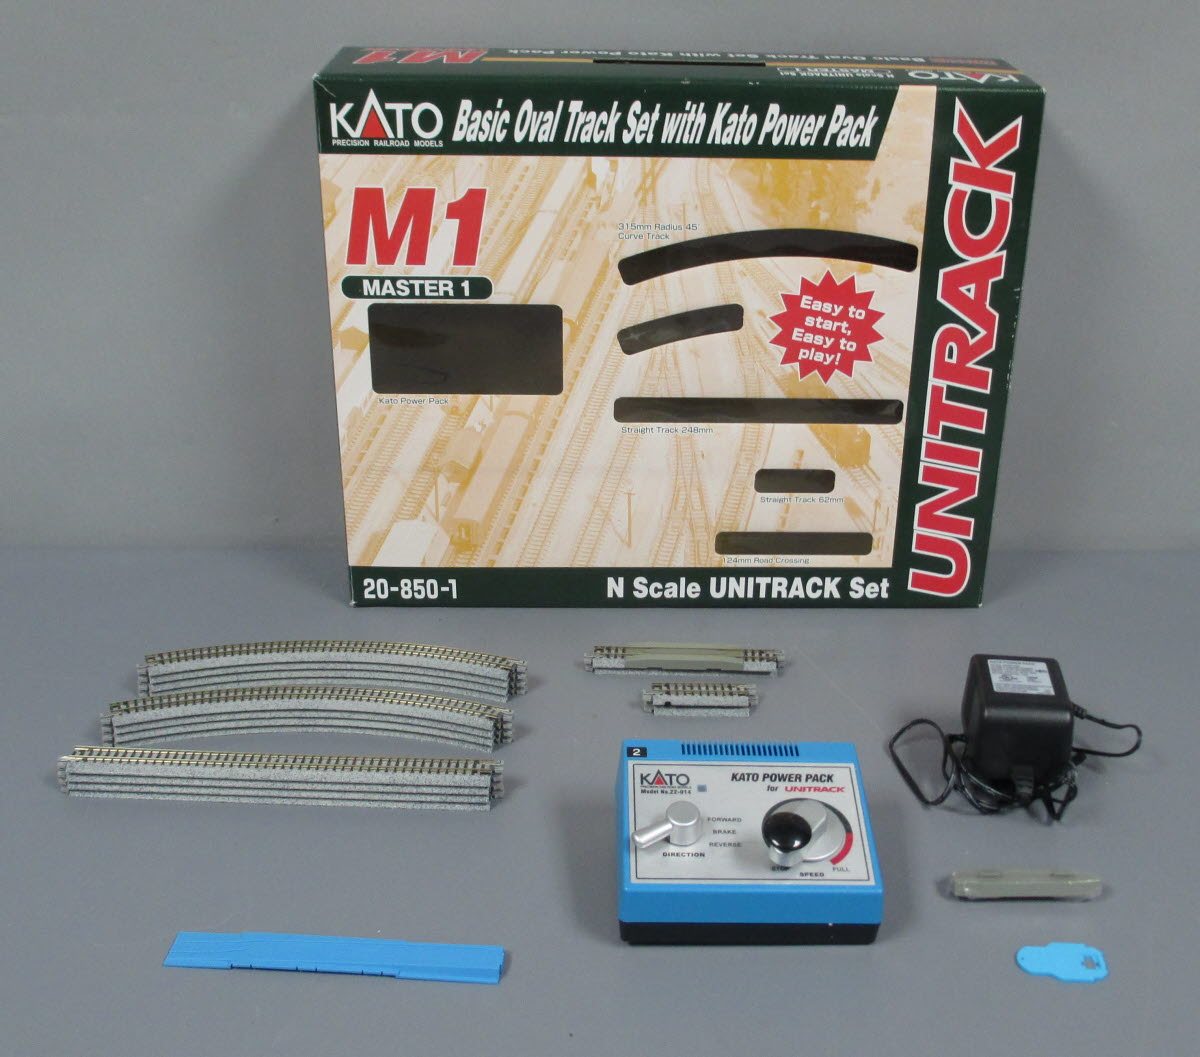 Kato 20-850-1 N Unitrack M1 Basic Oval Track Starter Set